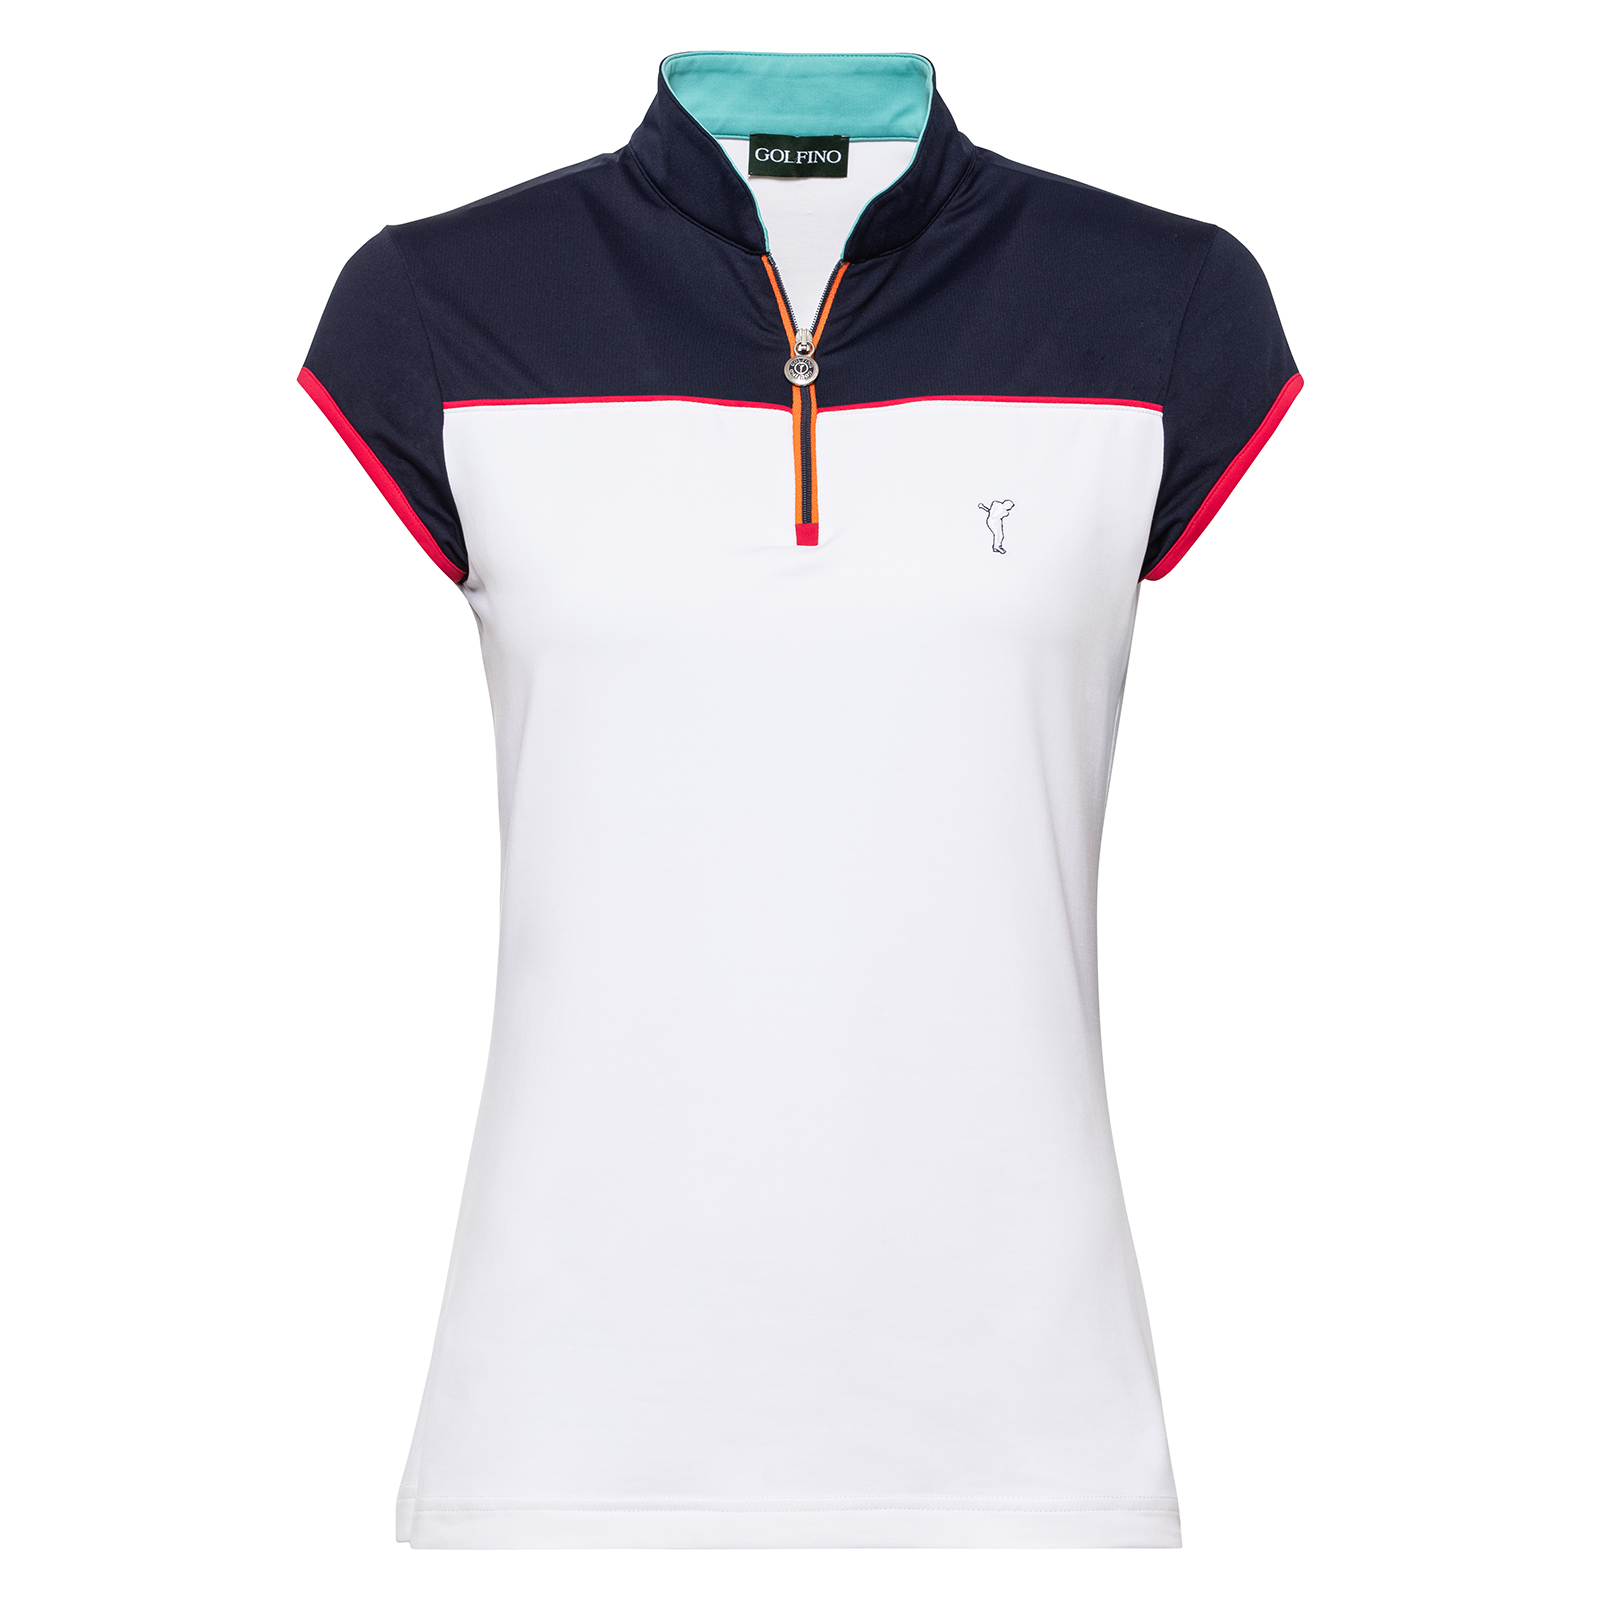 Ladies' lightweight golf polo shirt 